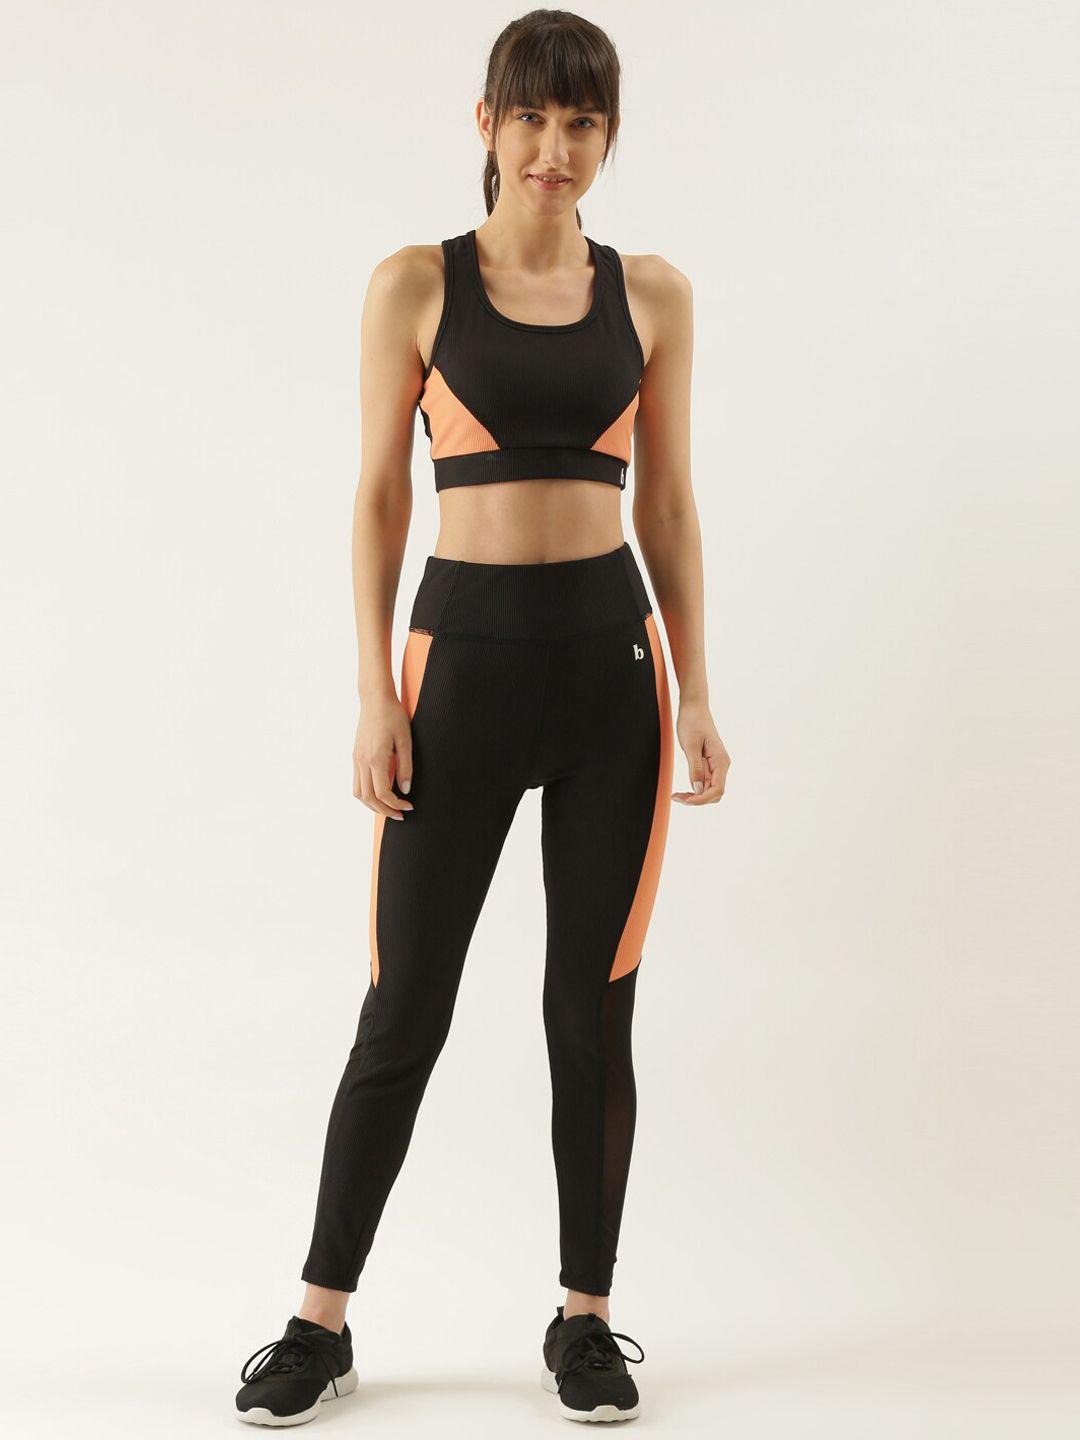 bannos swagger women black & peach colourblocked sport bra & tights